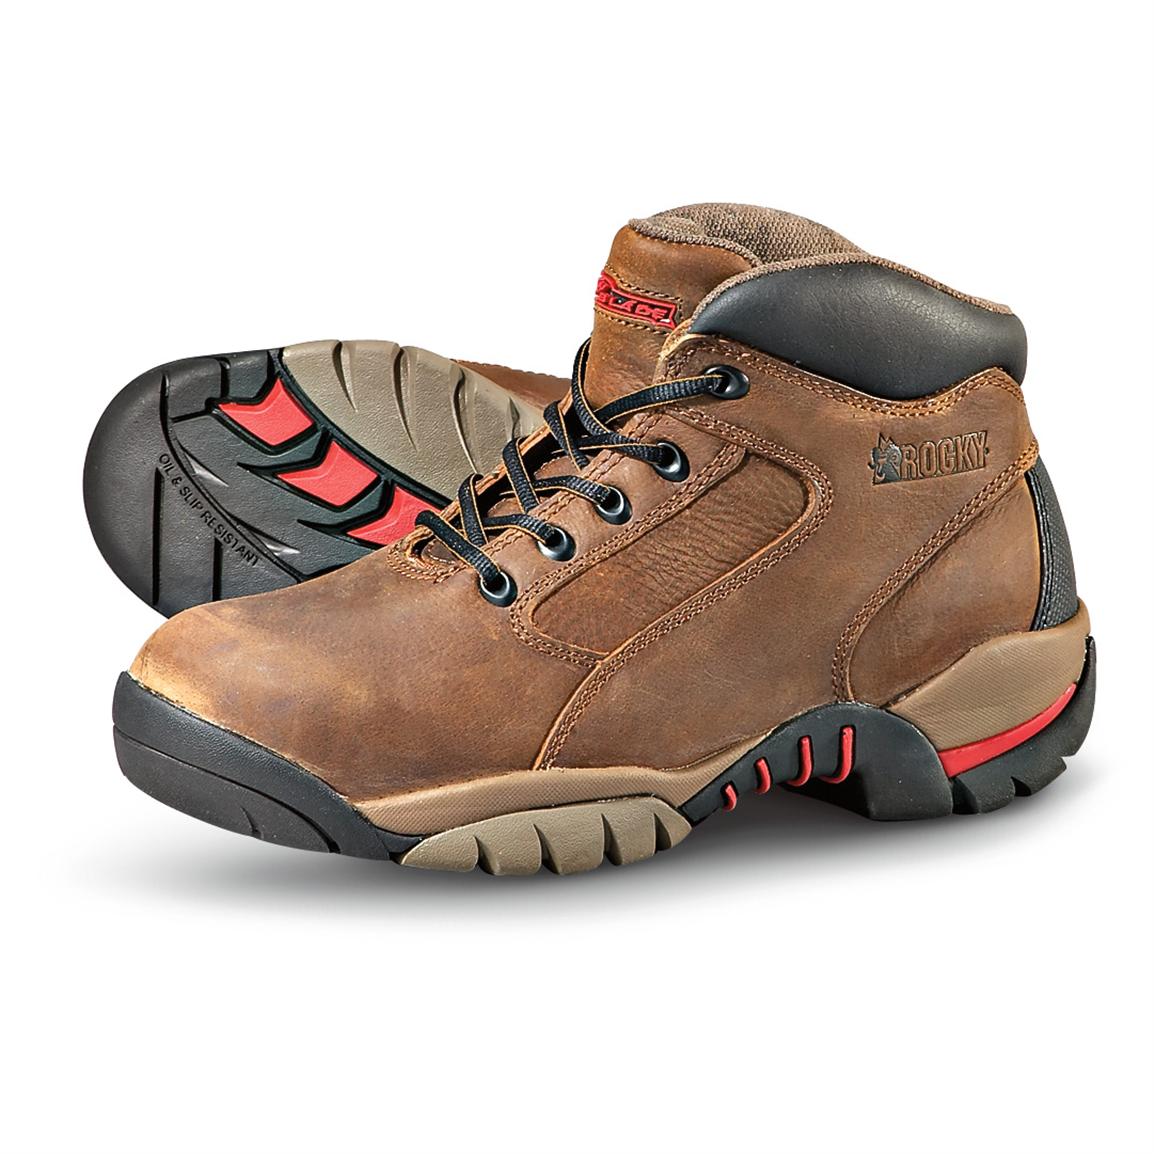 Men's Rocky® Steel Toe Hiking Boots, Brown - 170723 ...